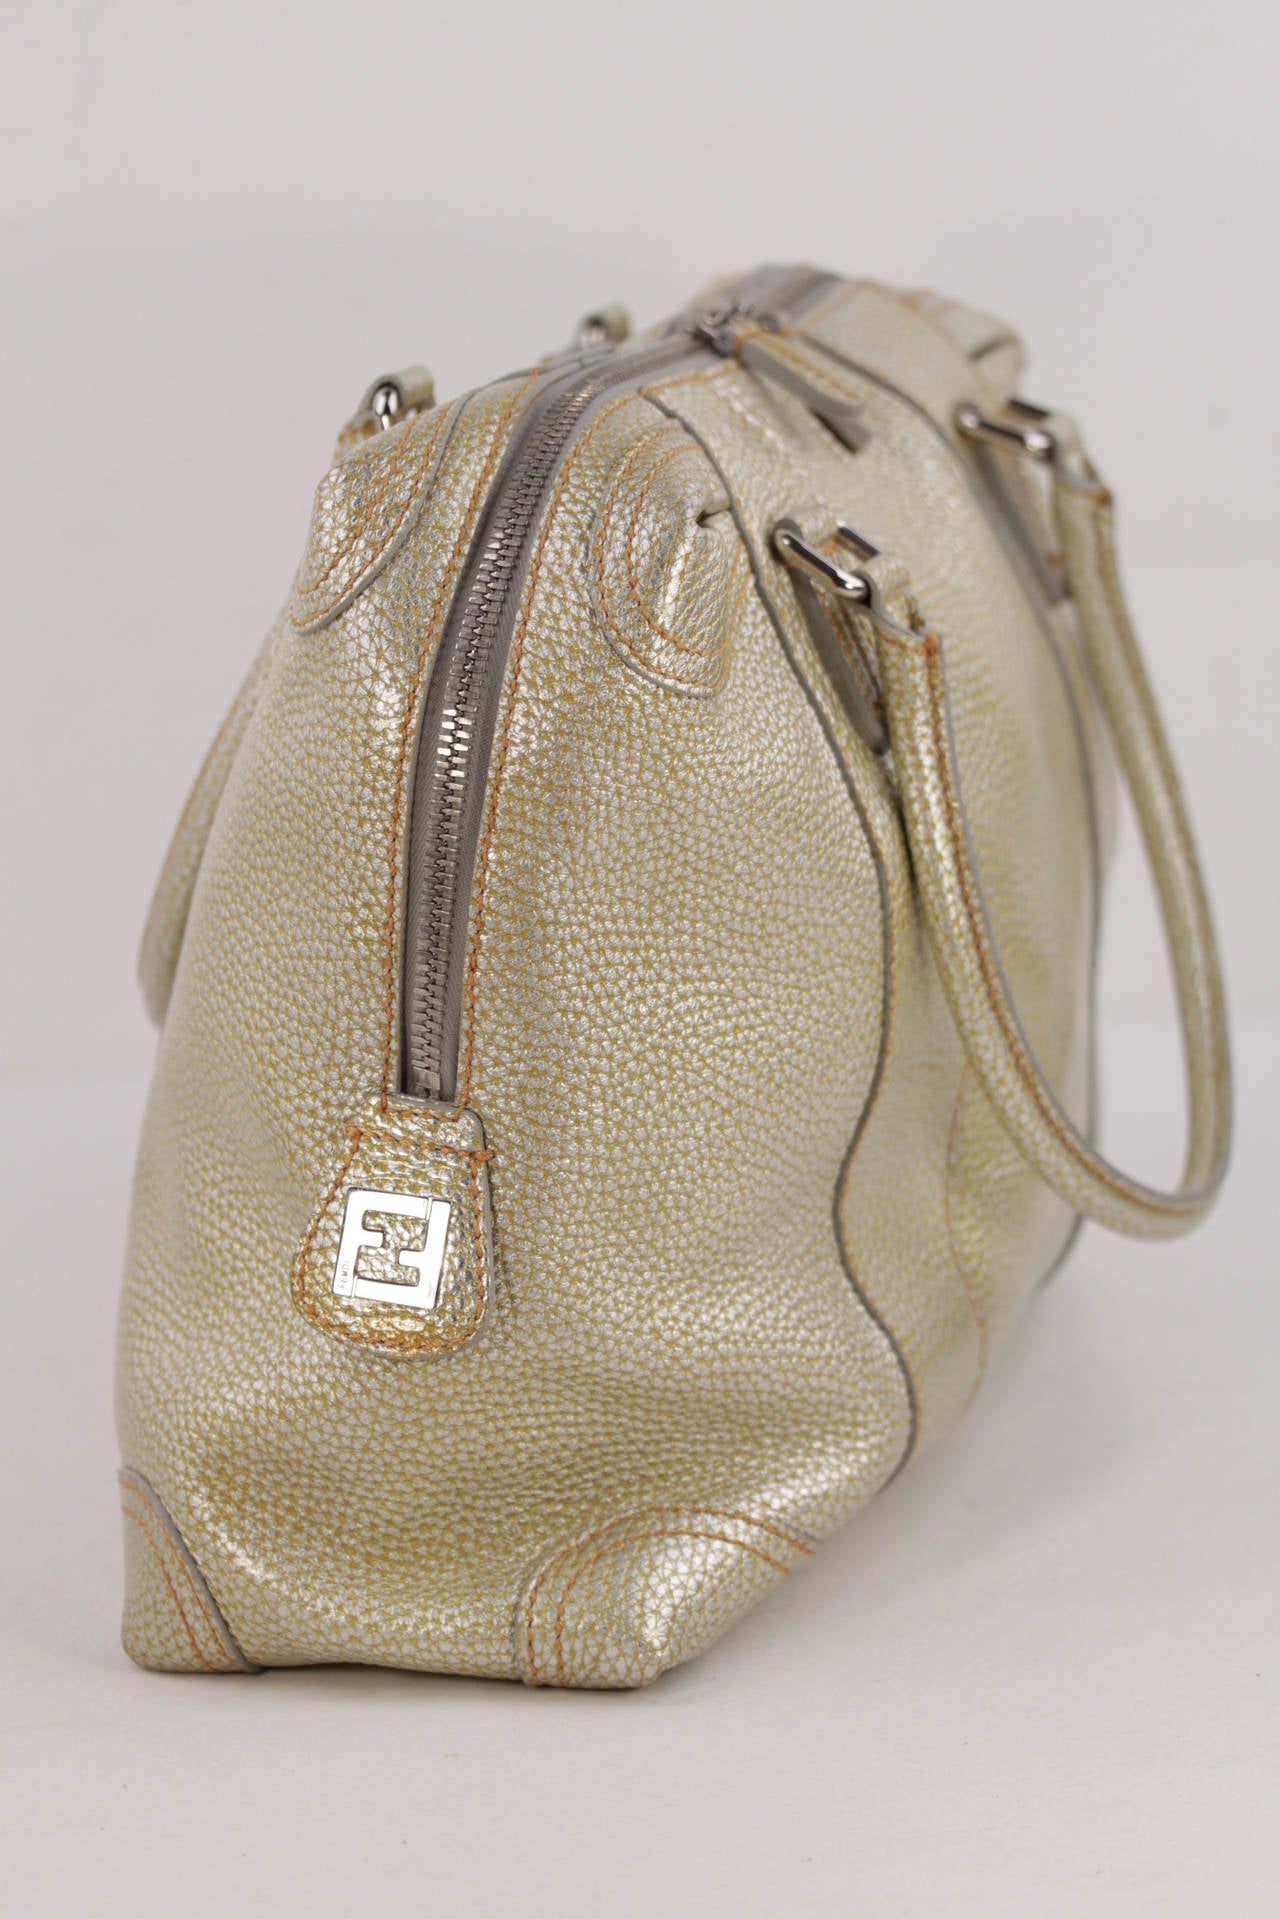 Beige FENDI Italian Golden Pebbled Leather B MIX TOTE Large Handbag SATCHEL